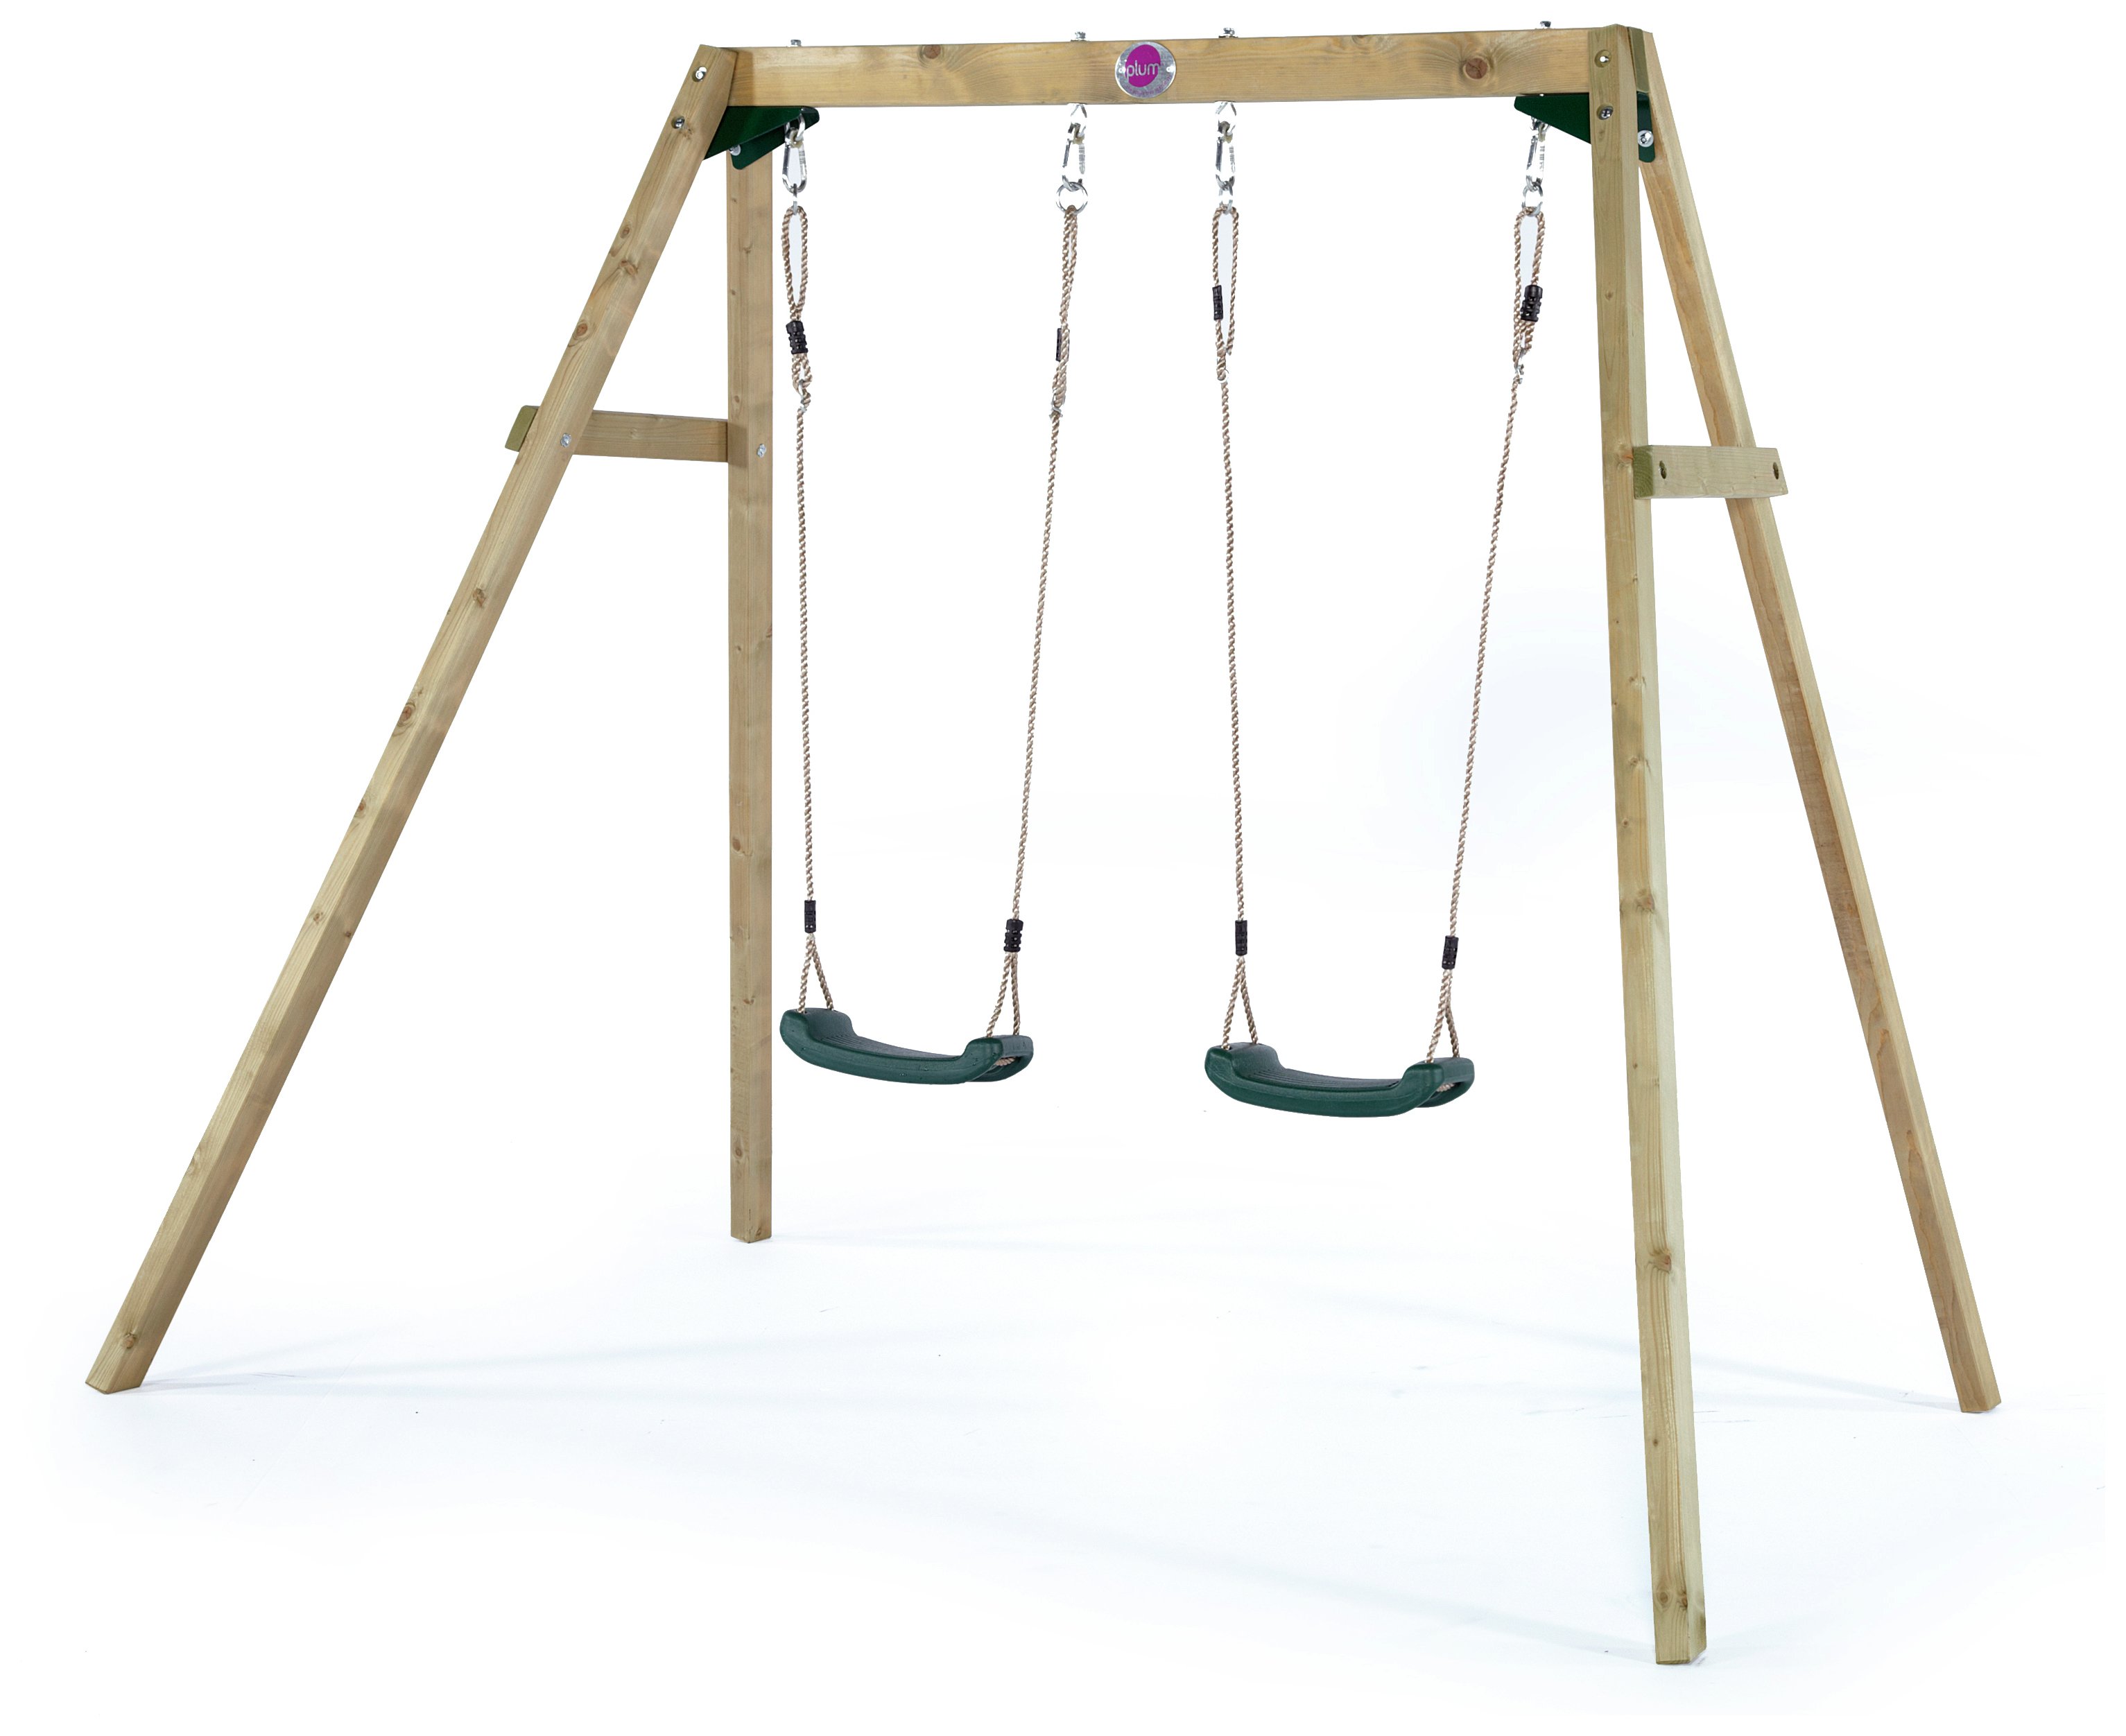 Plum Wooden Double Swing Set.